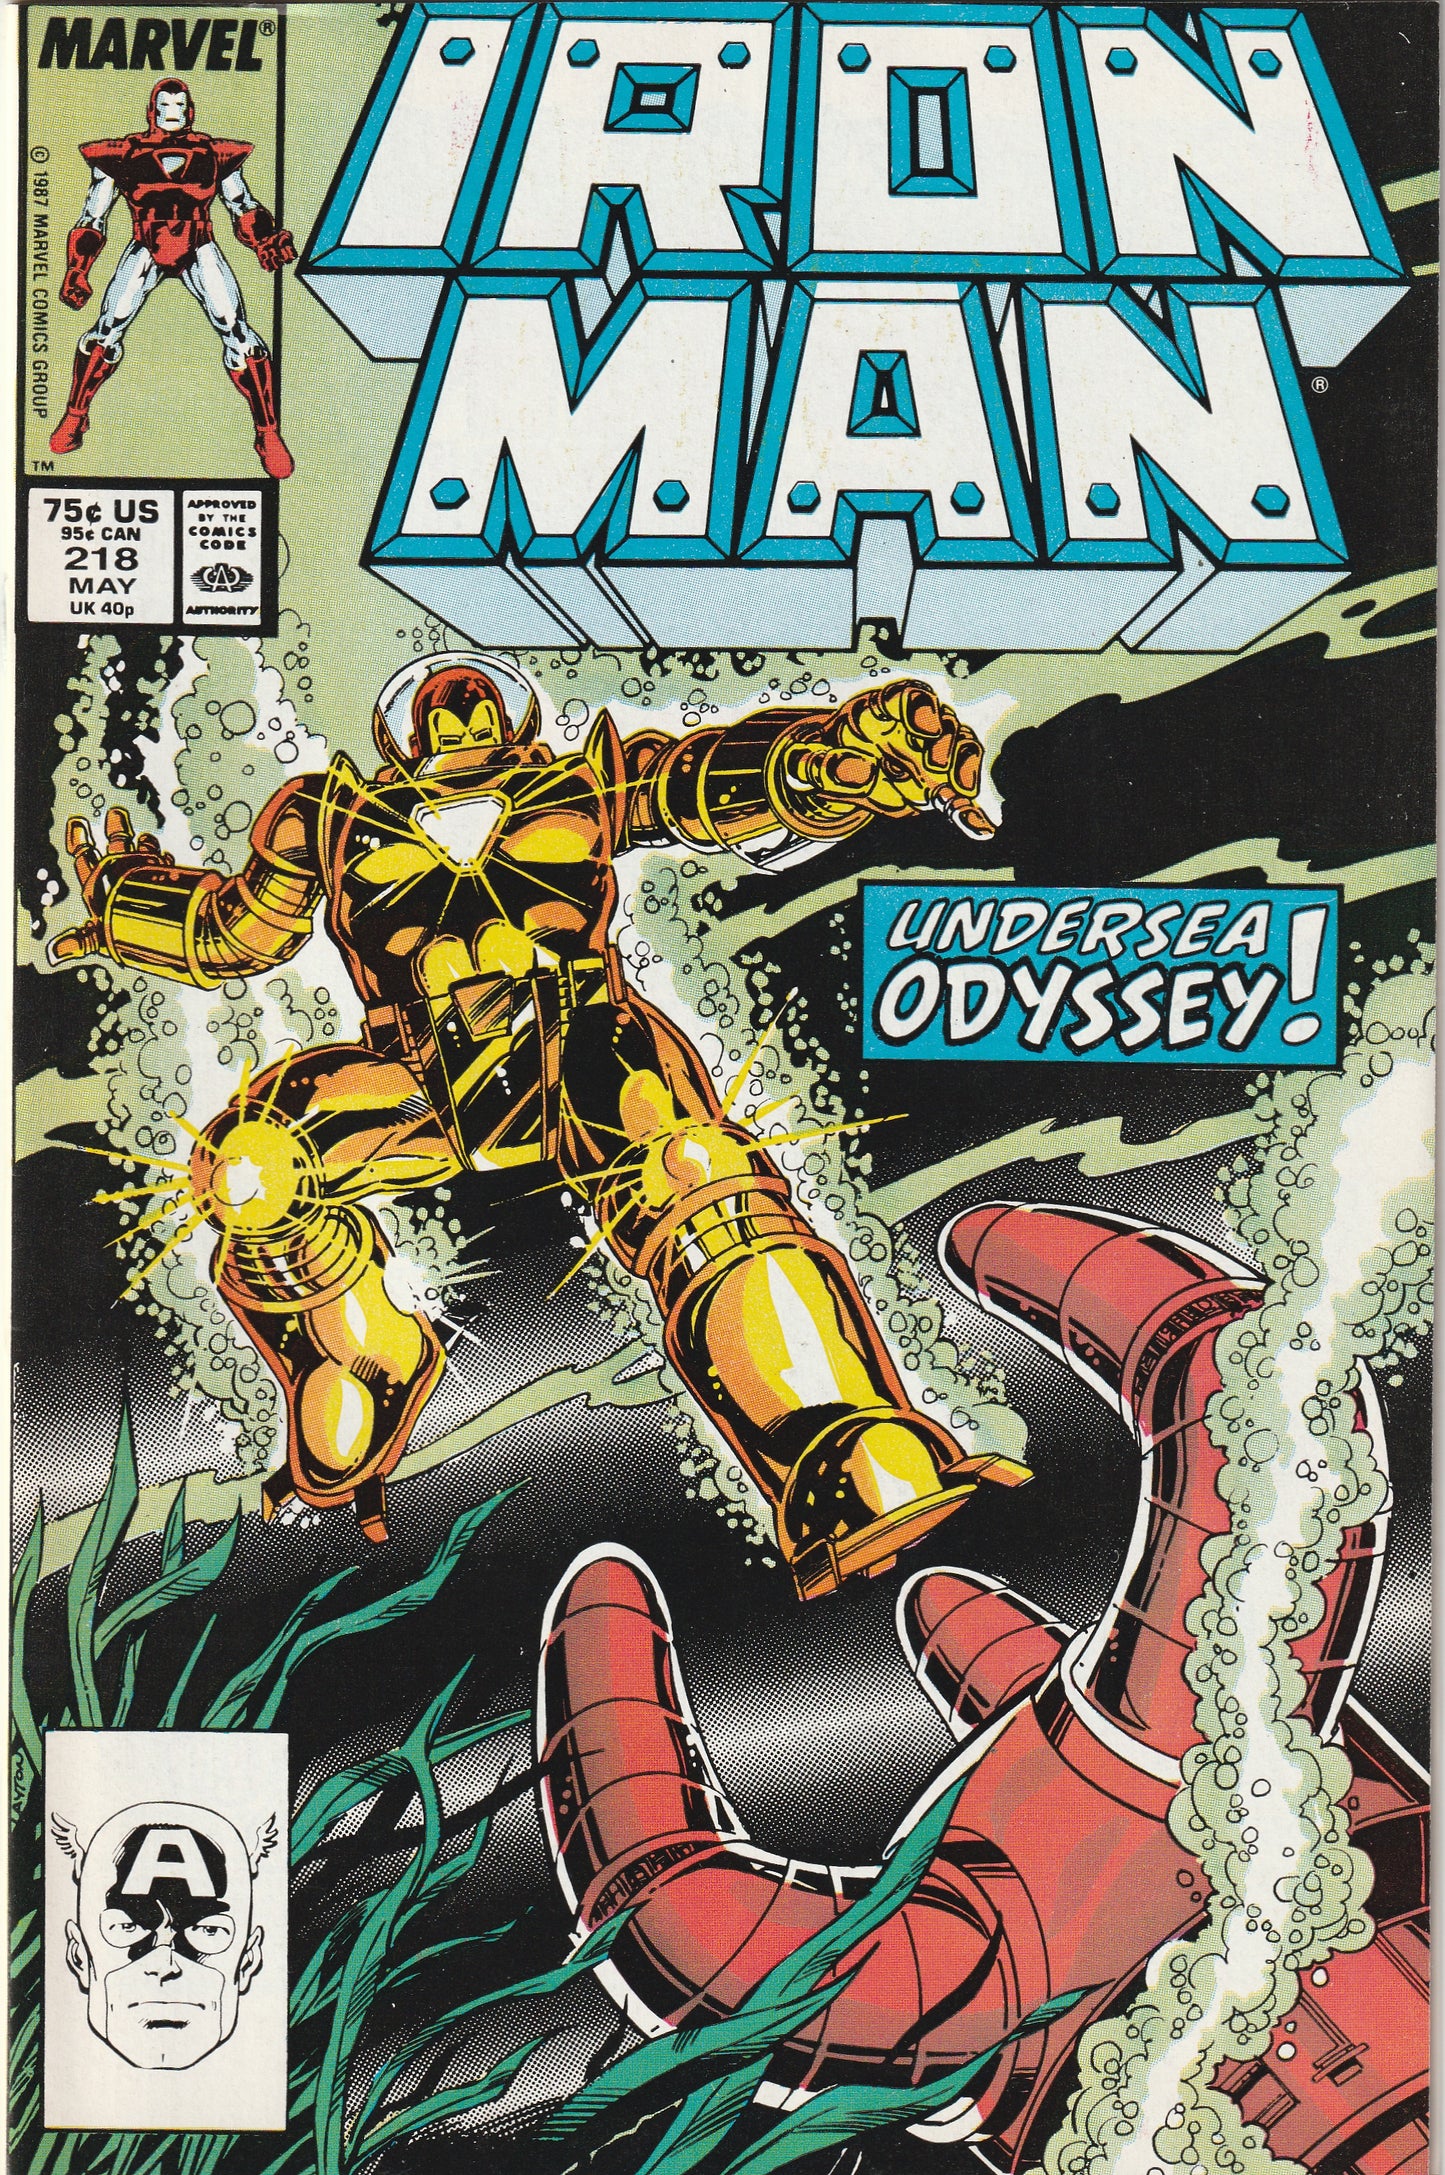 Iron Man #218 (1987) - 1st appearance of Iron Man's Hydro Armor